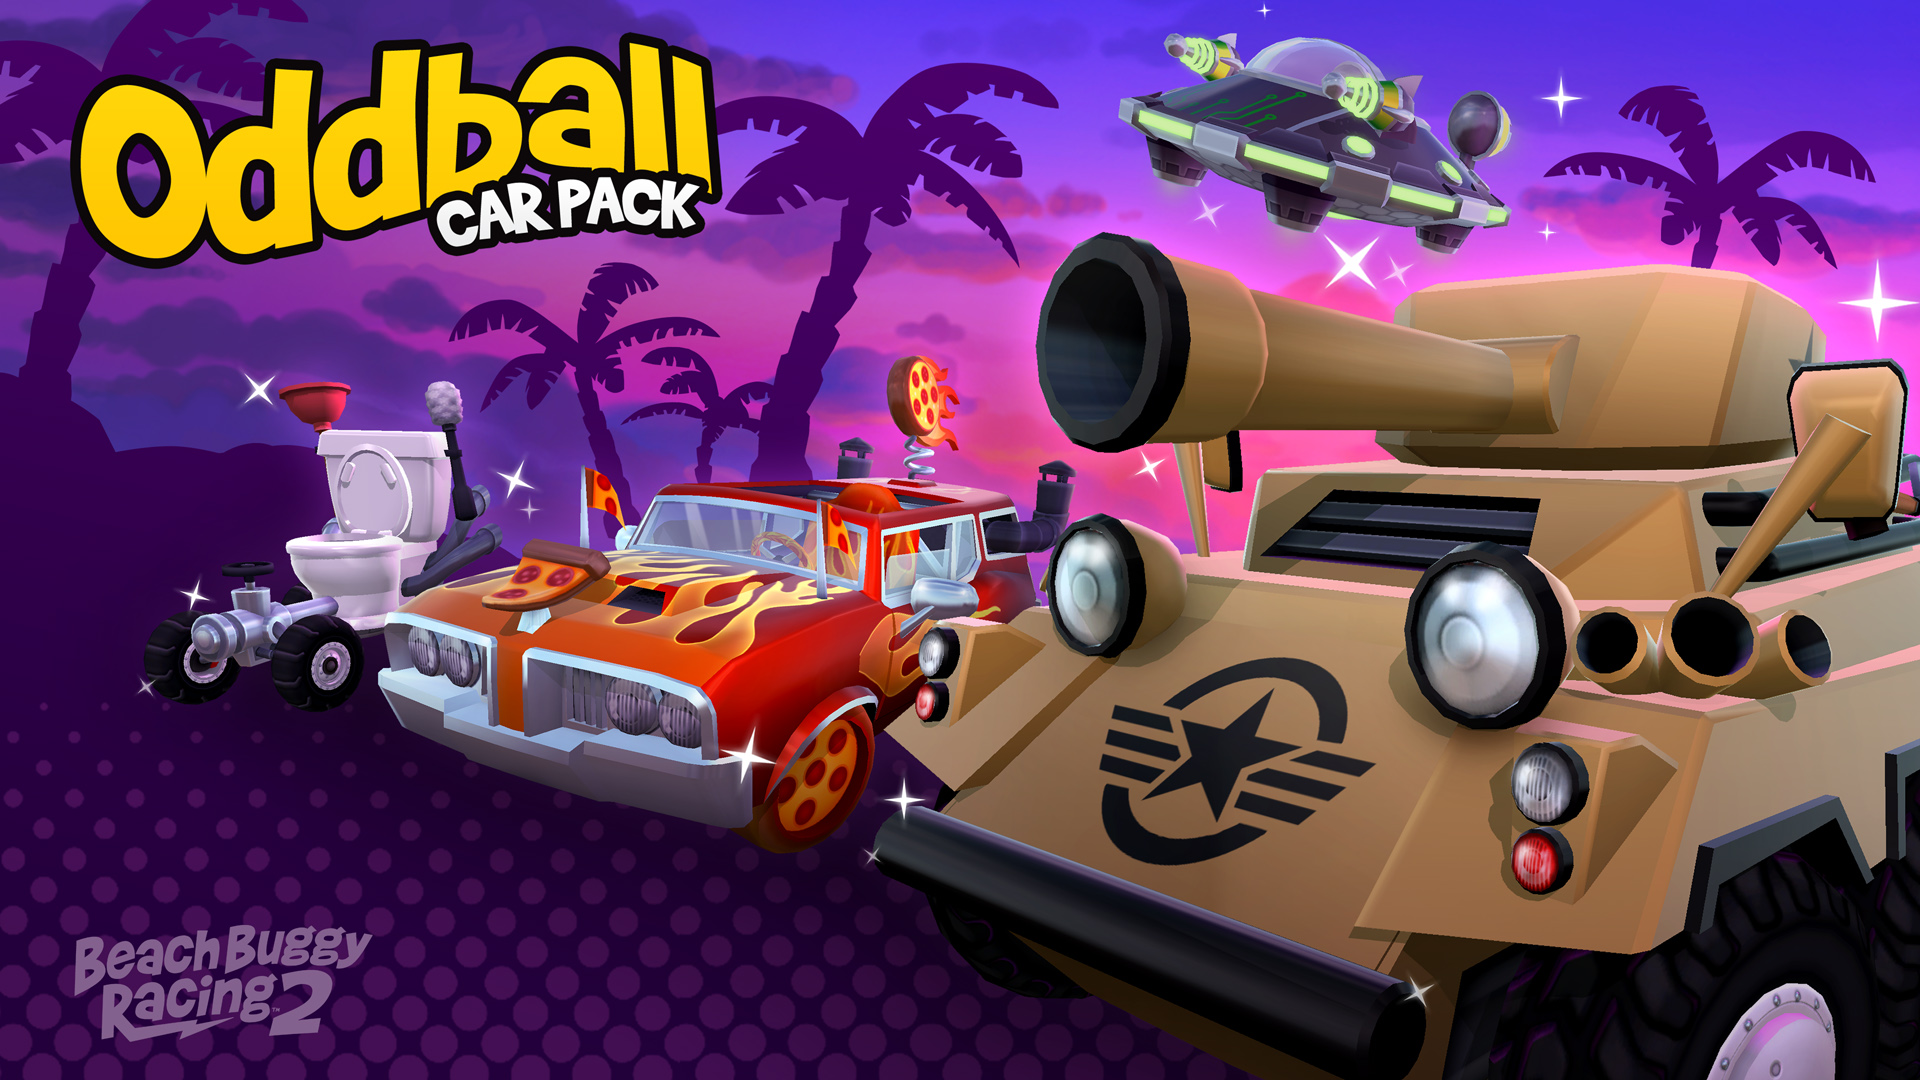 Oddball Car Pack